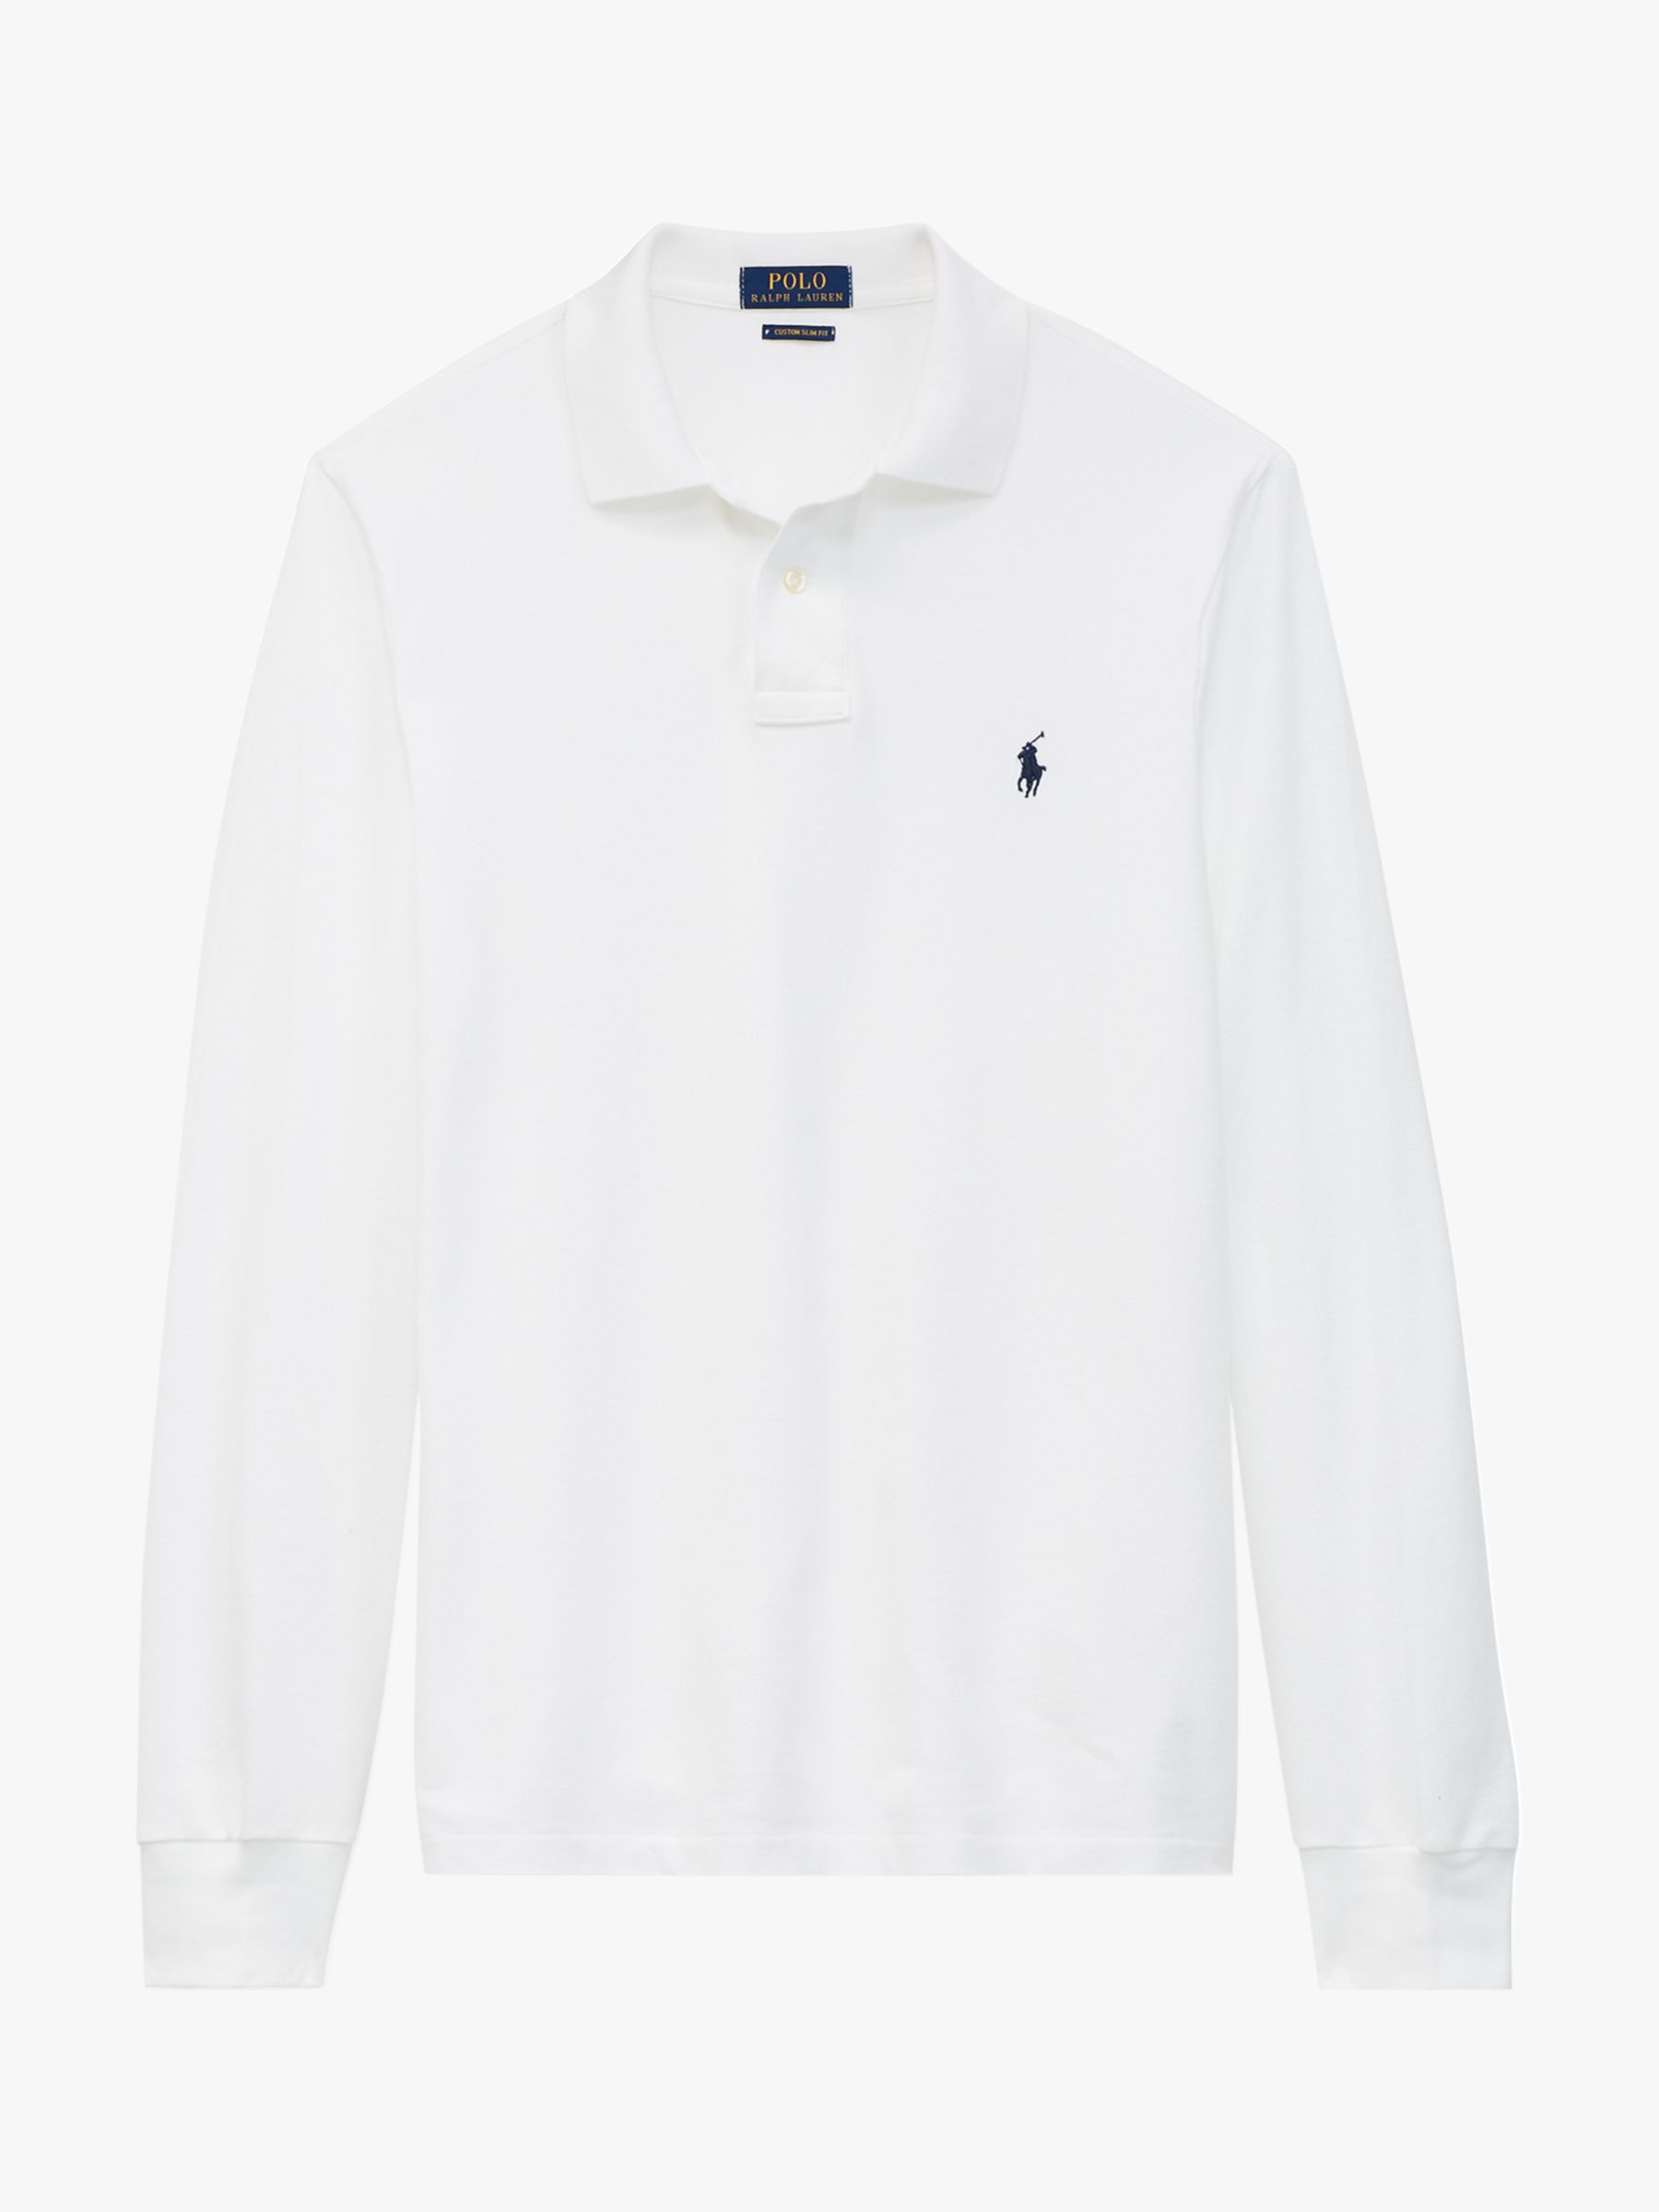 Polo Ralph Lauren Custom Slim Fit Long Sleeve Polo Shirt, White, S